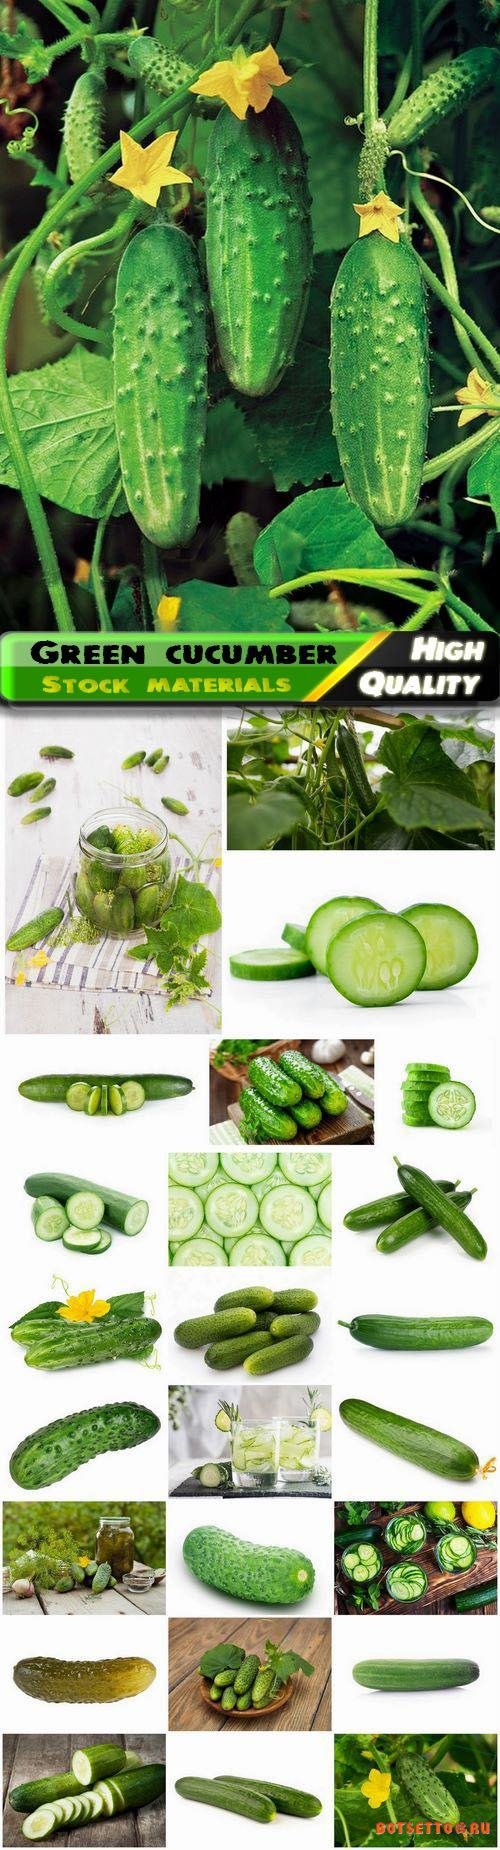 Green cucumber healthy food with vitamins 25 HQ Jpg